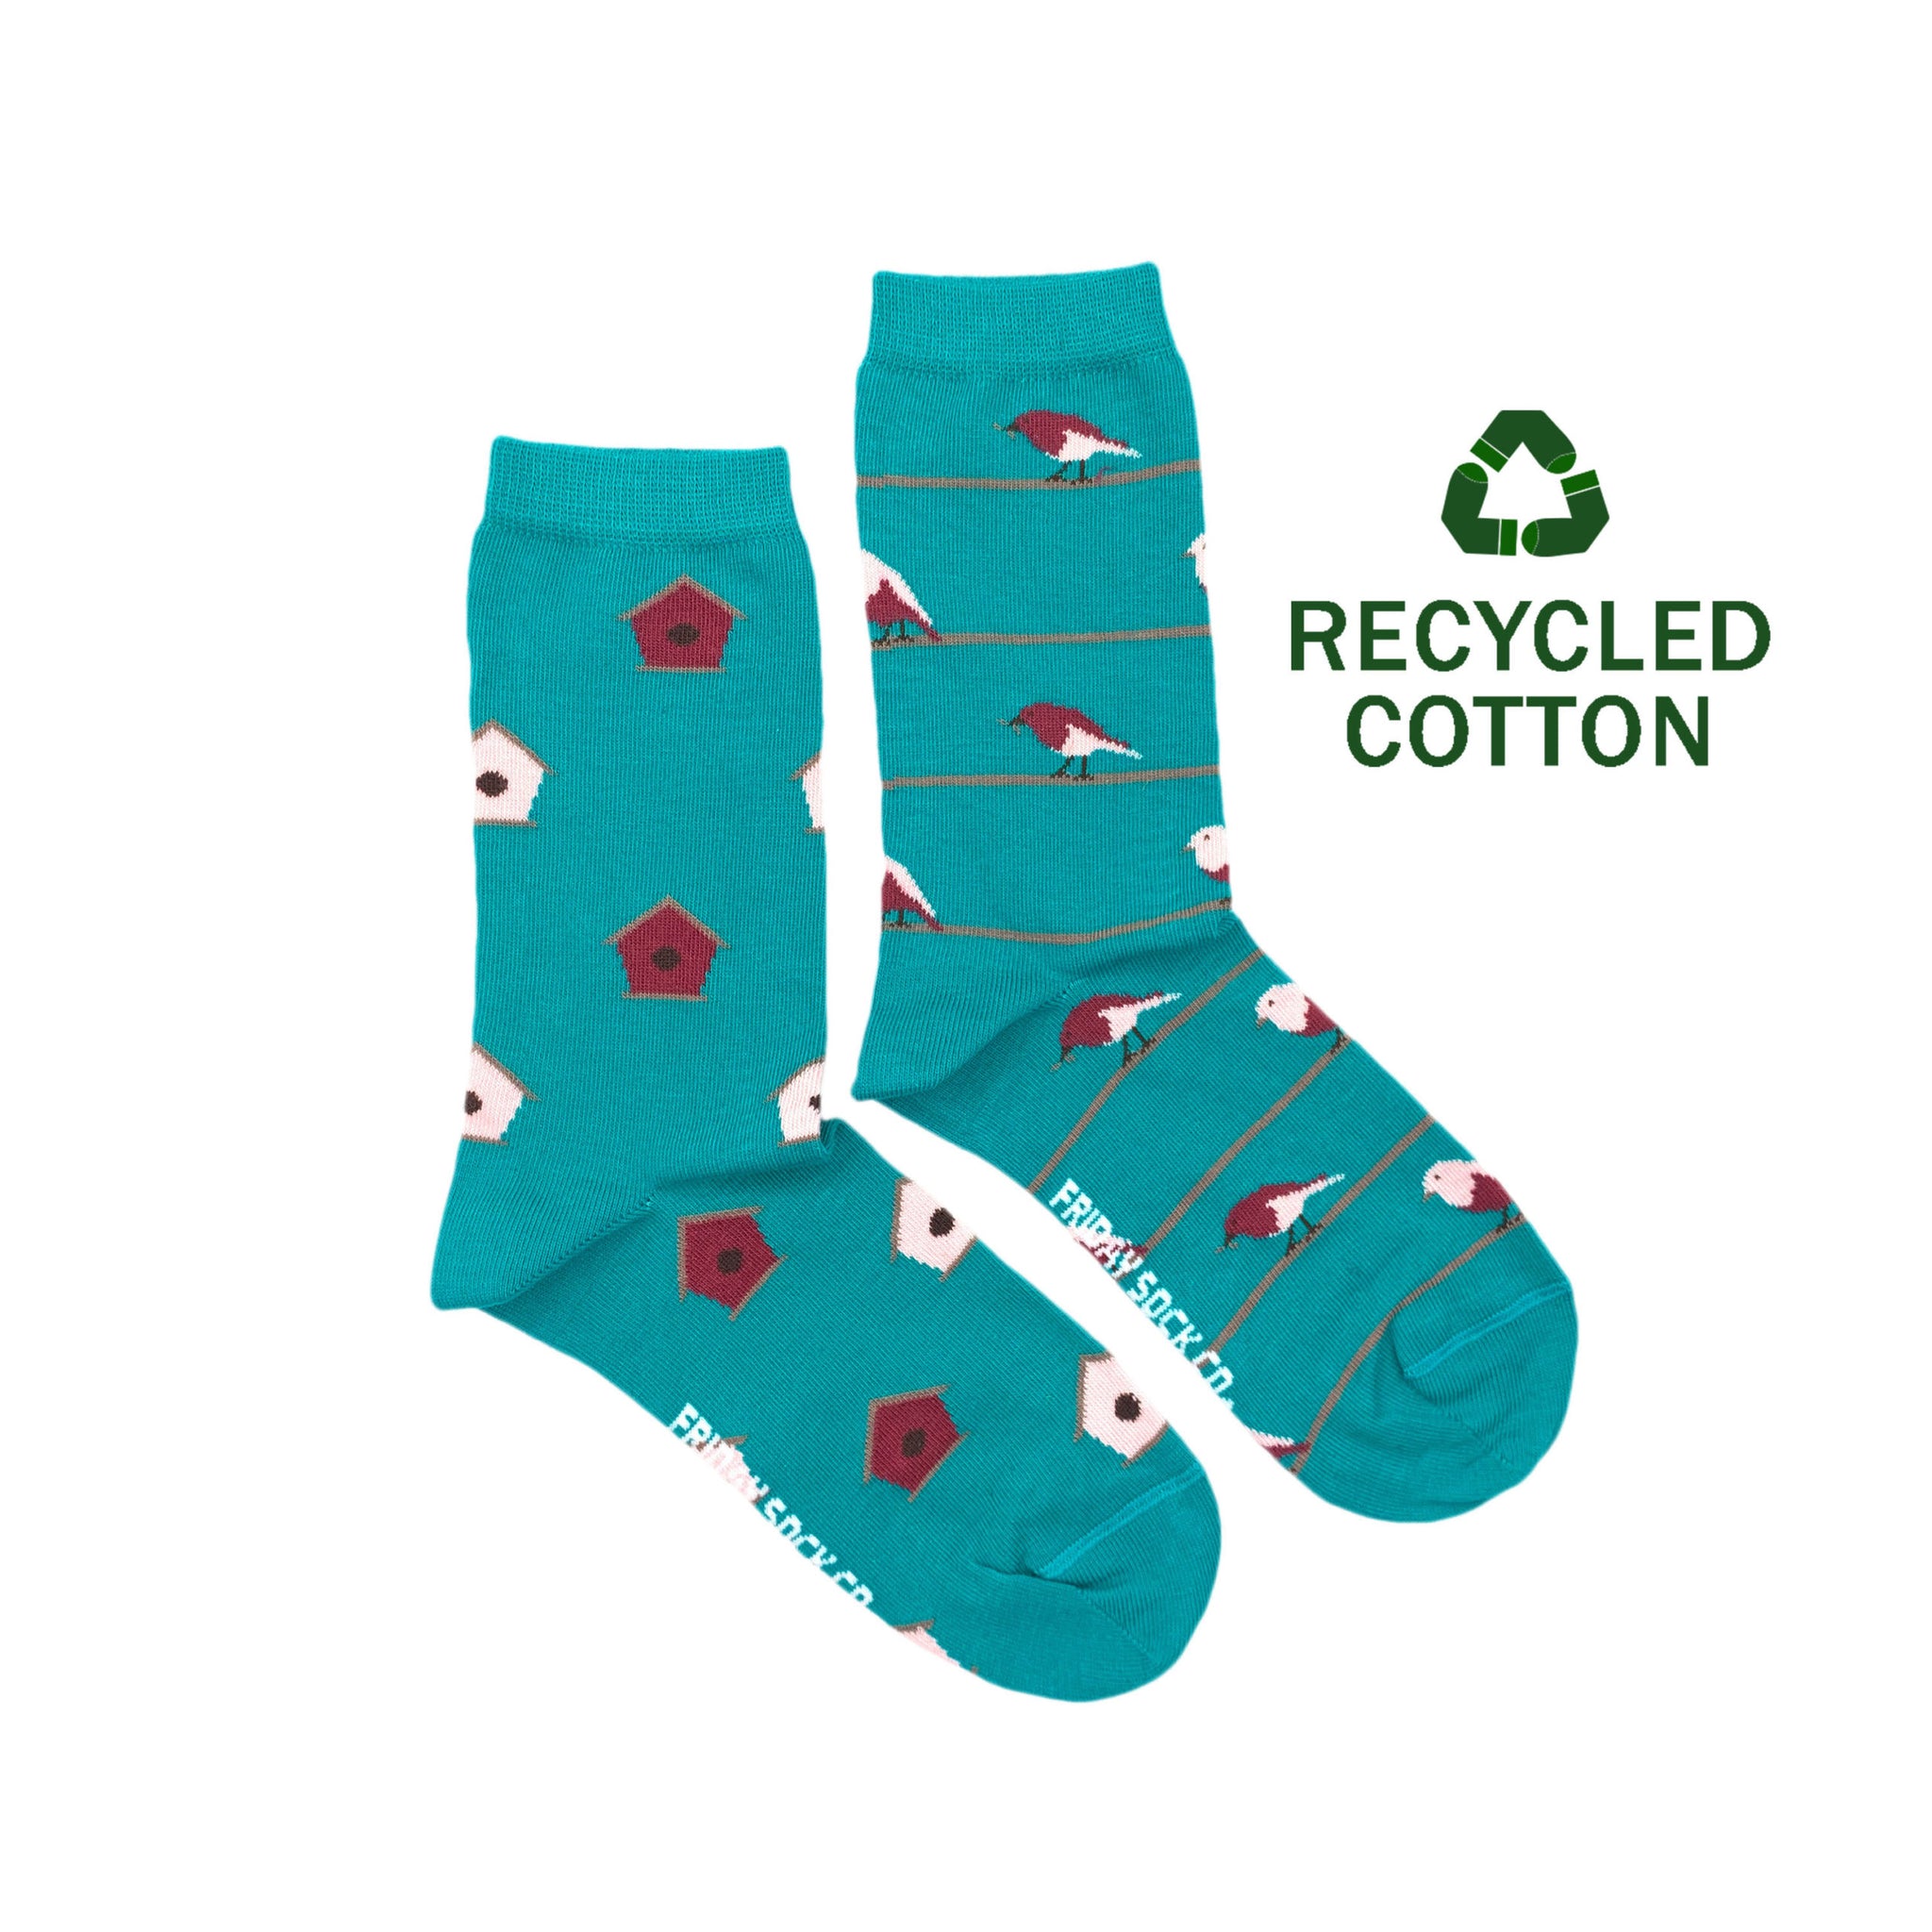 Birdhouse & Bird Recycled Cotton Crew Socks